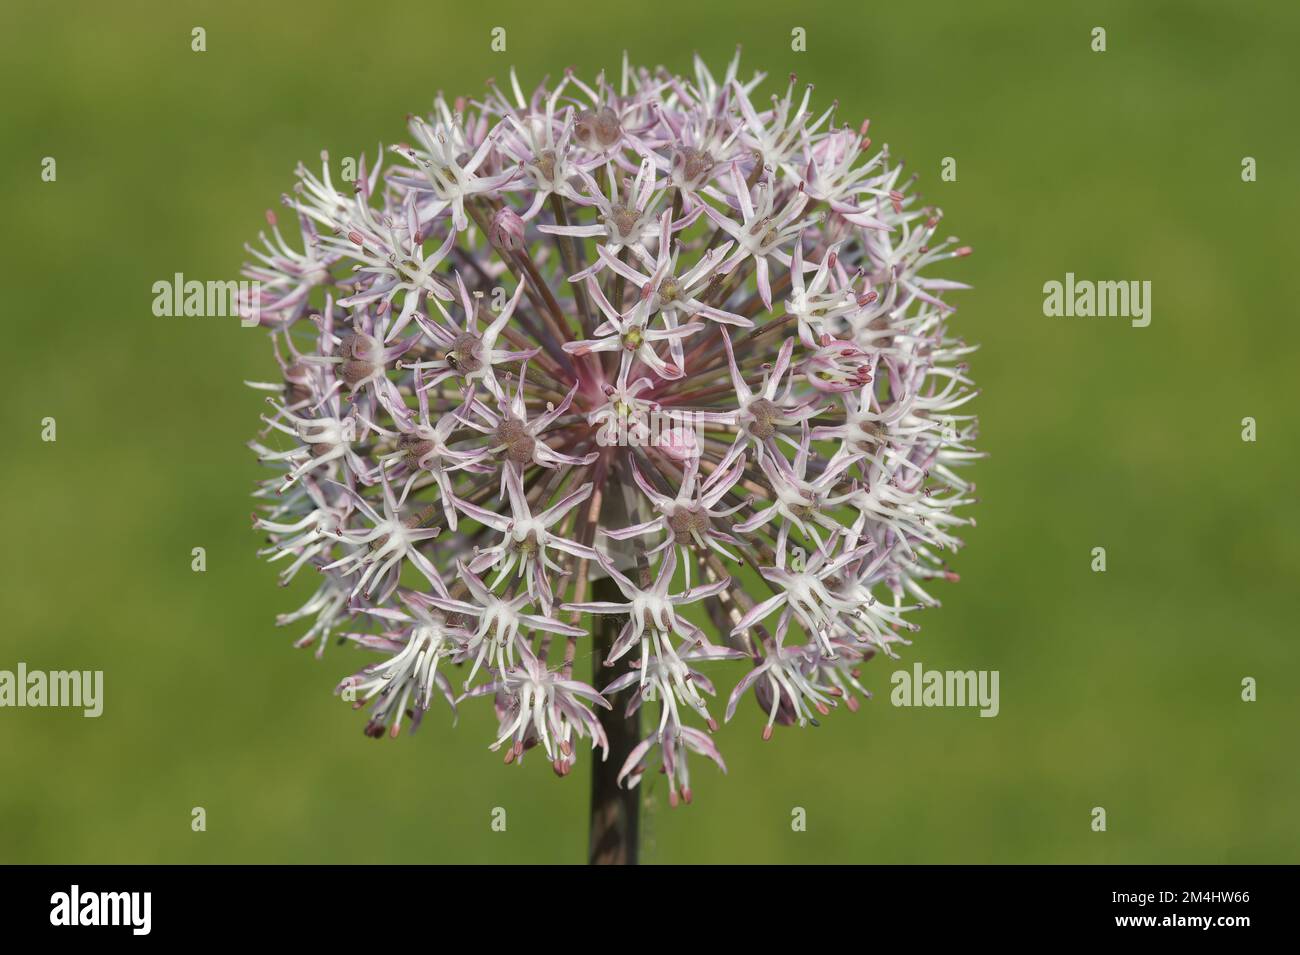 Closeup on an ornamental garlic species, Allium karataviense or the Giant onion against a green background Stock Photo